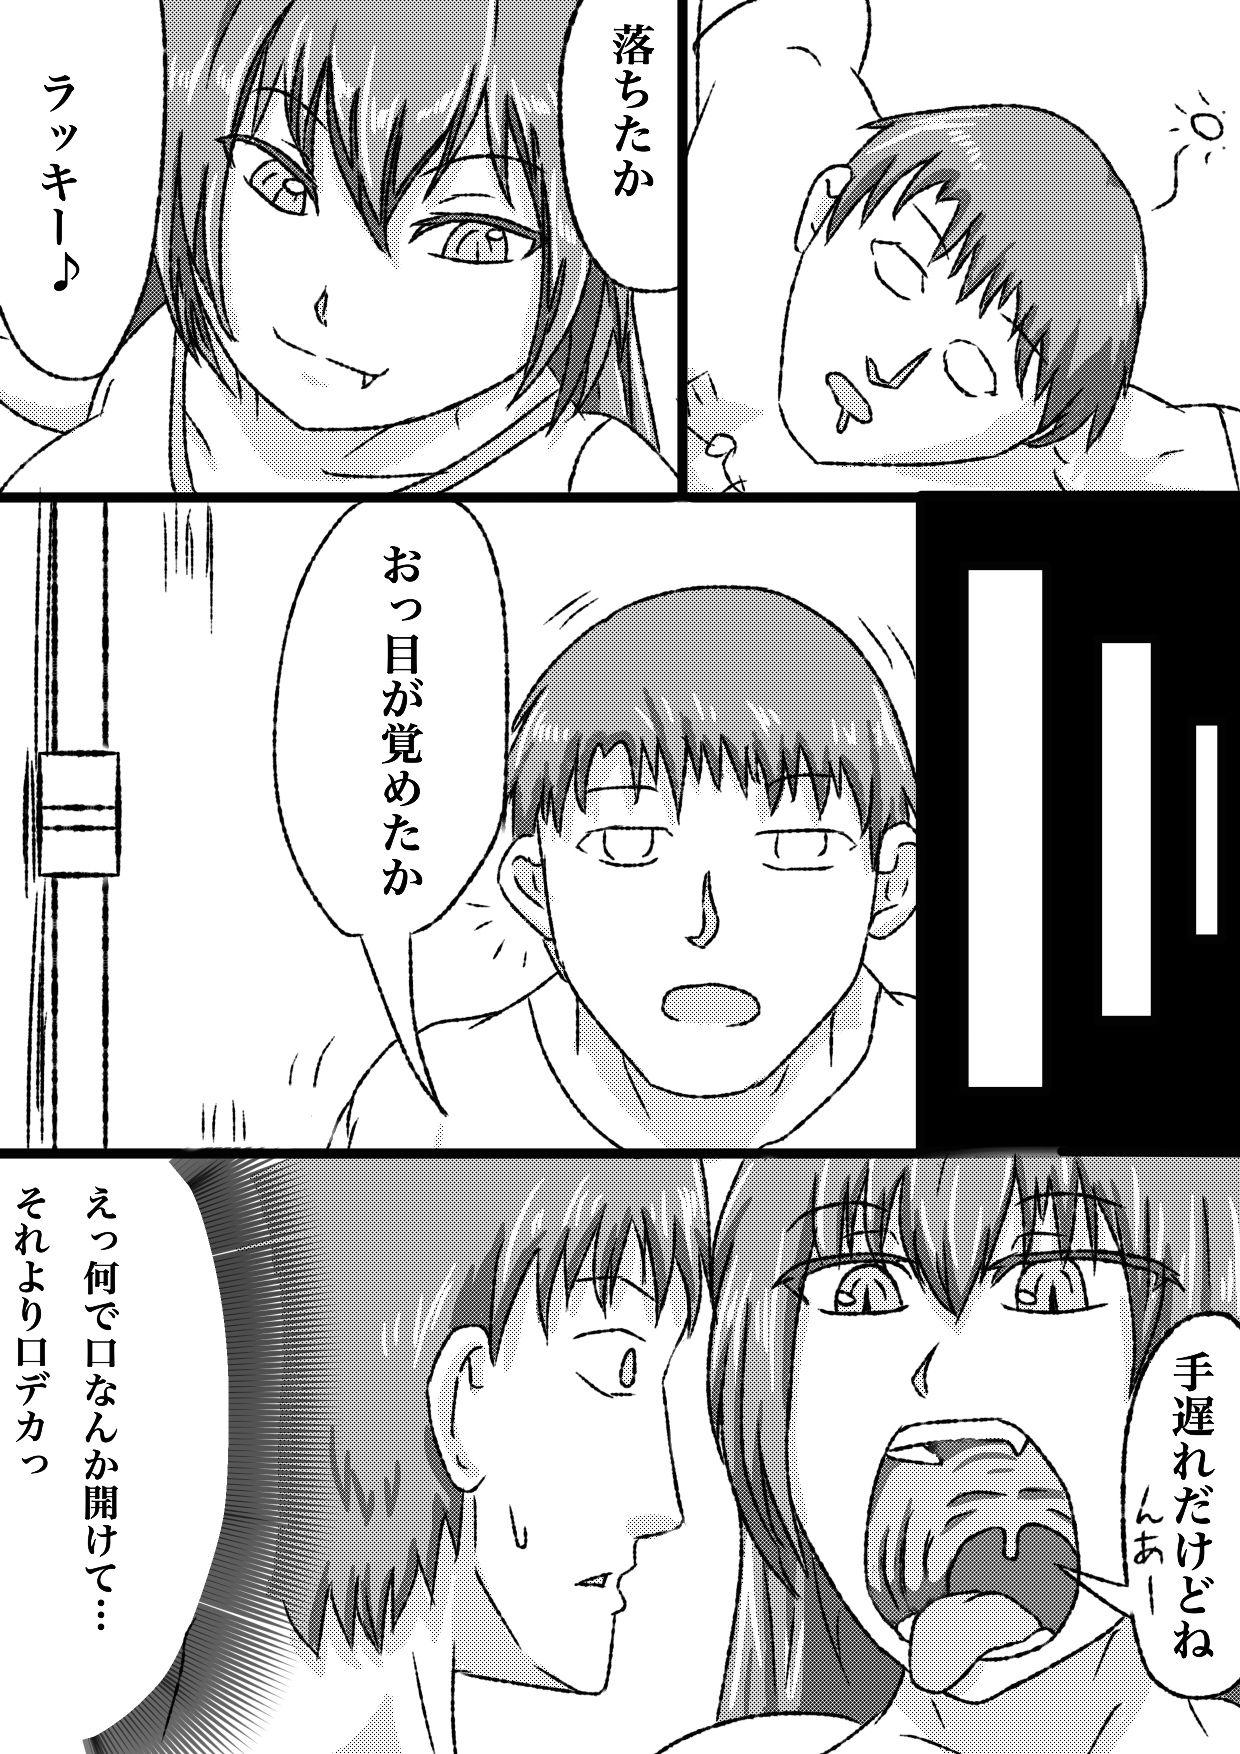 Pack uchi no ko marunomi manga - Original Female Domination - Page 4